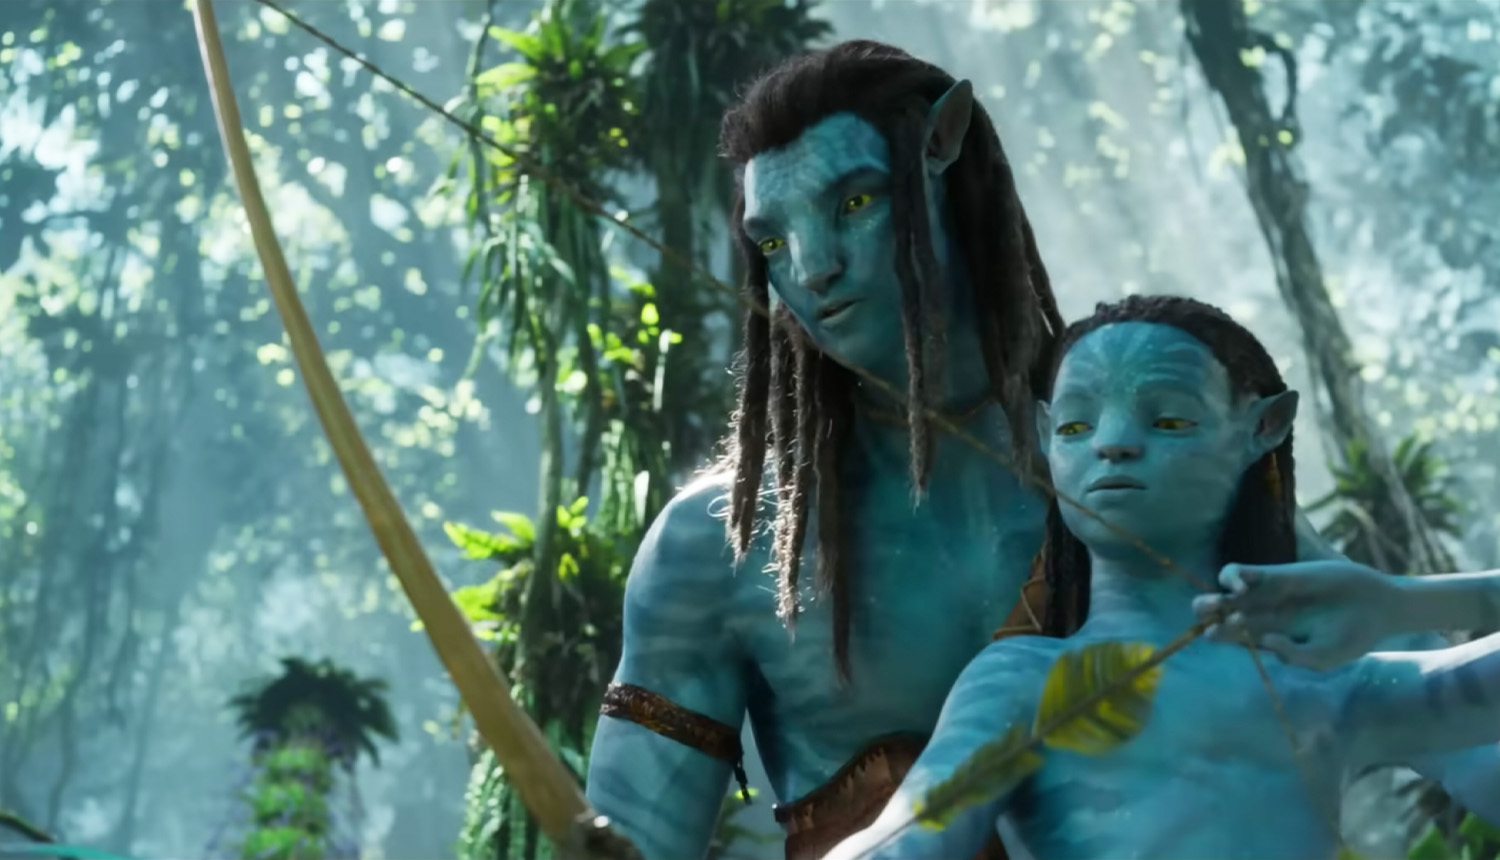 Avatarcom  The Official Avatar Website for Avatar News